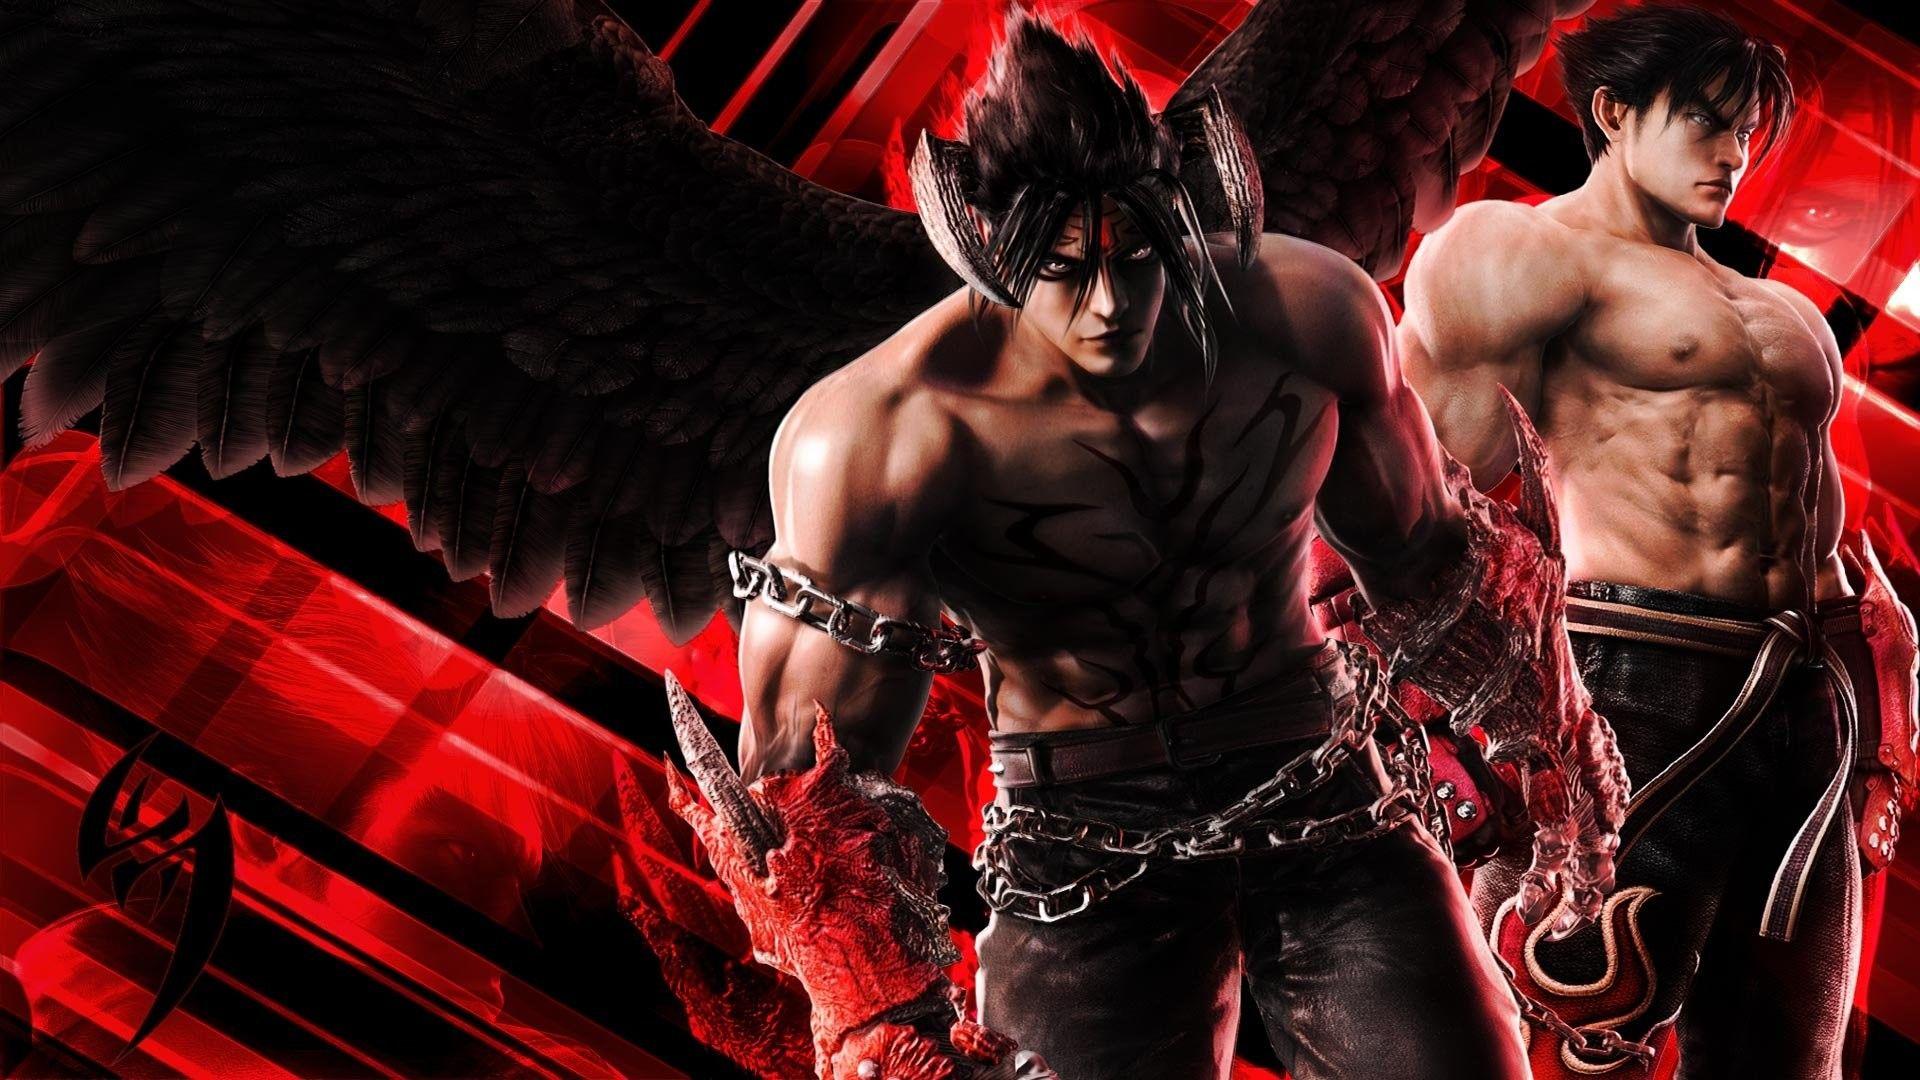 Tekken 6 Devil Jin Wallpaper background picture